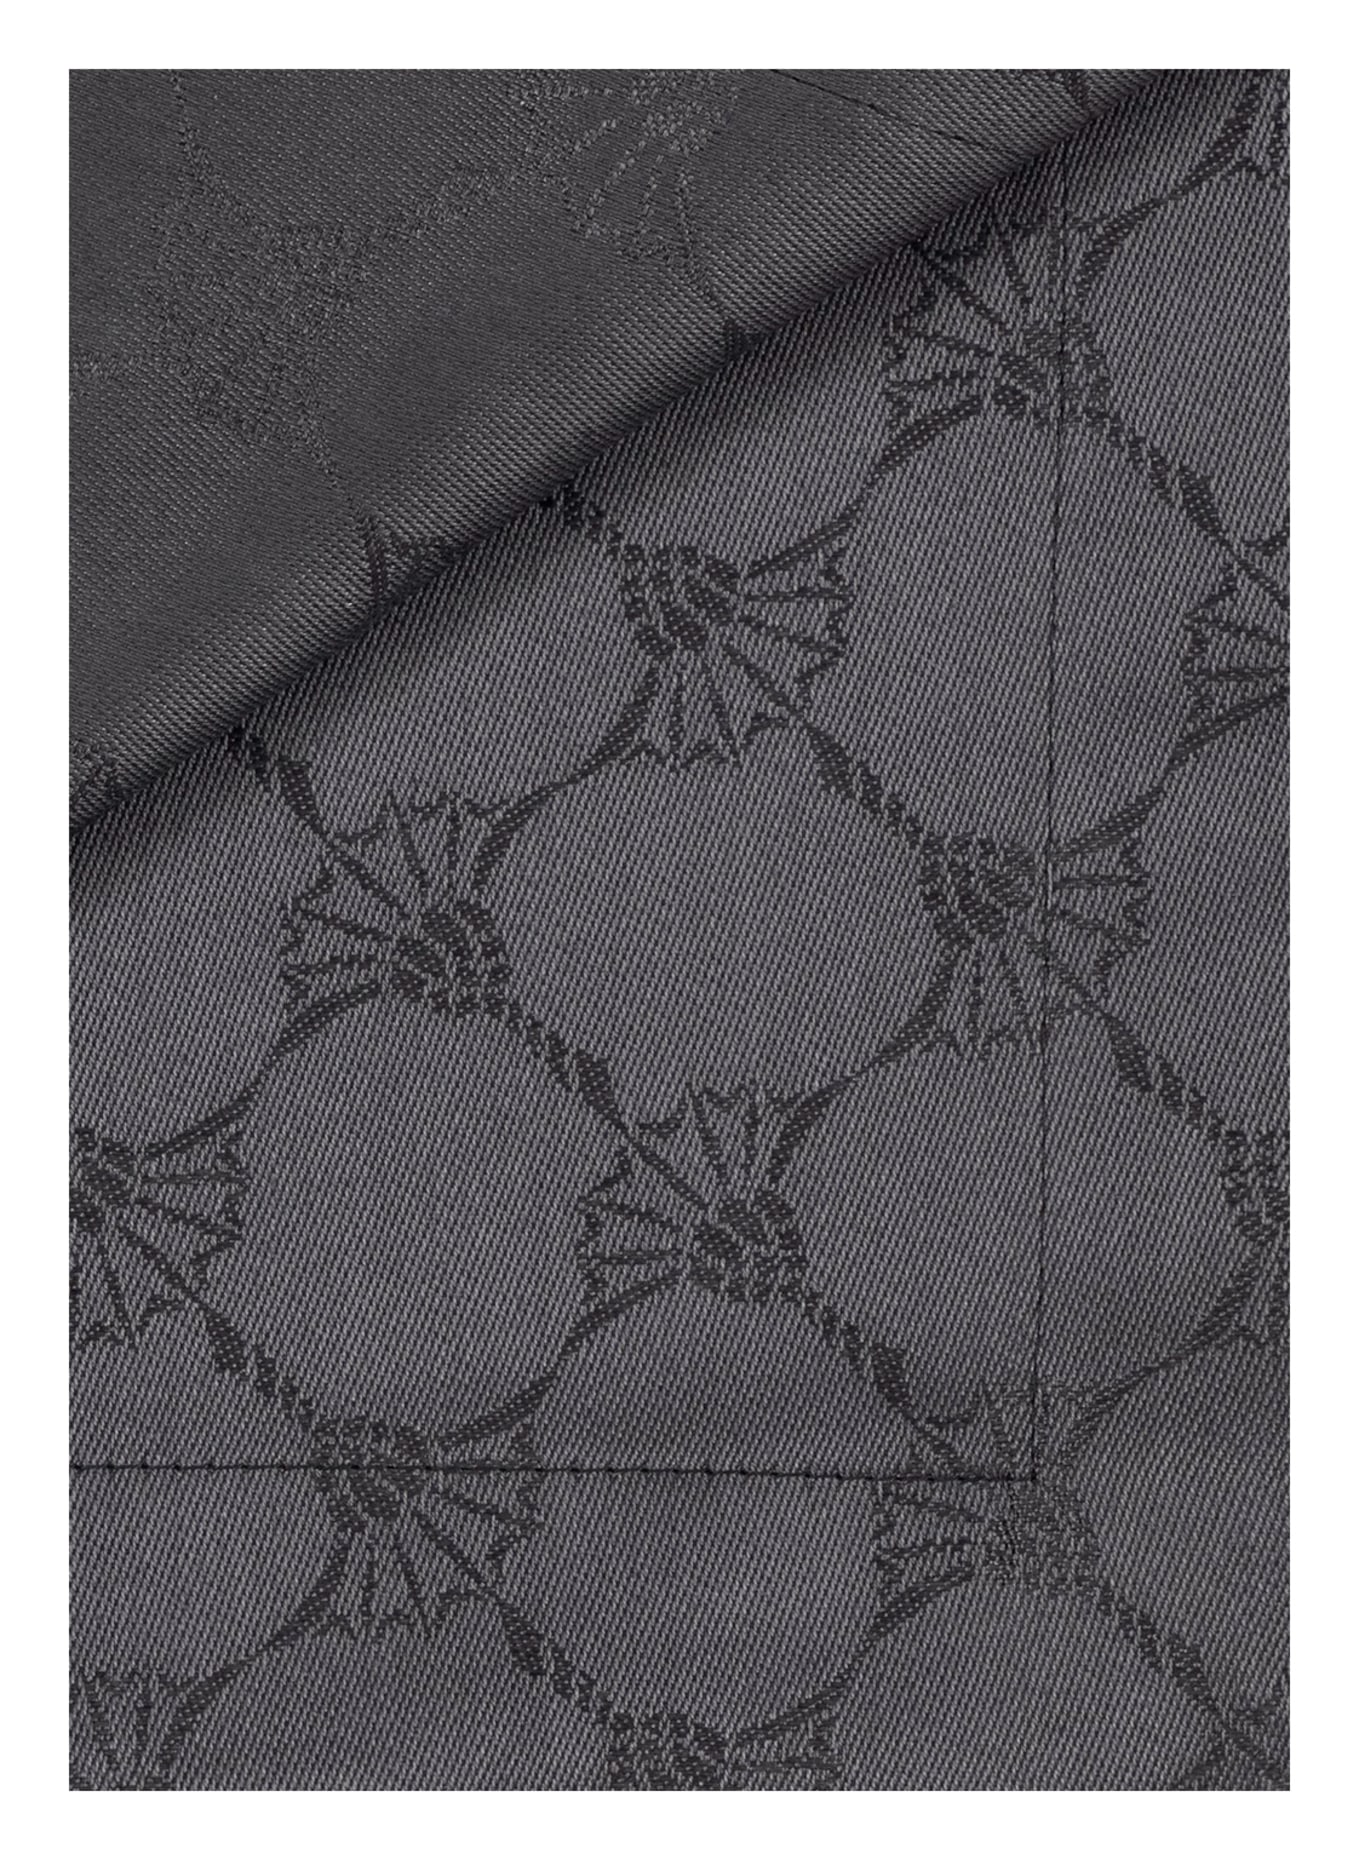 JOOP! Table cloth CORNFLOWER ALL-OVER in dark gray